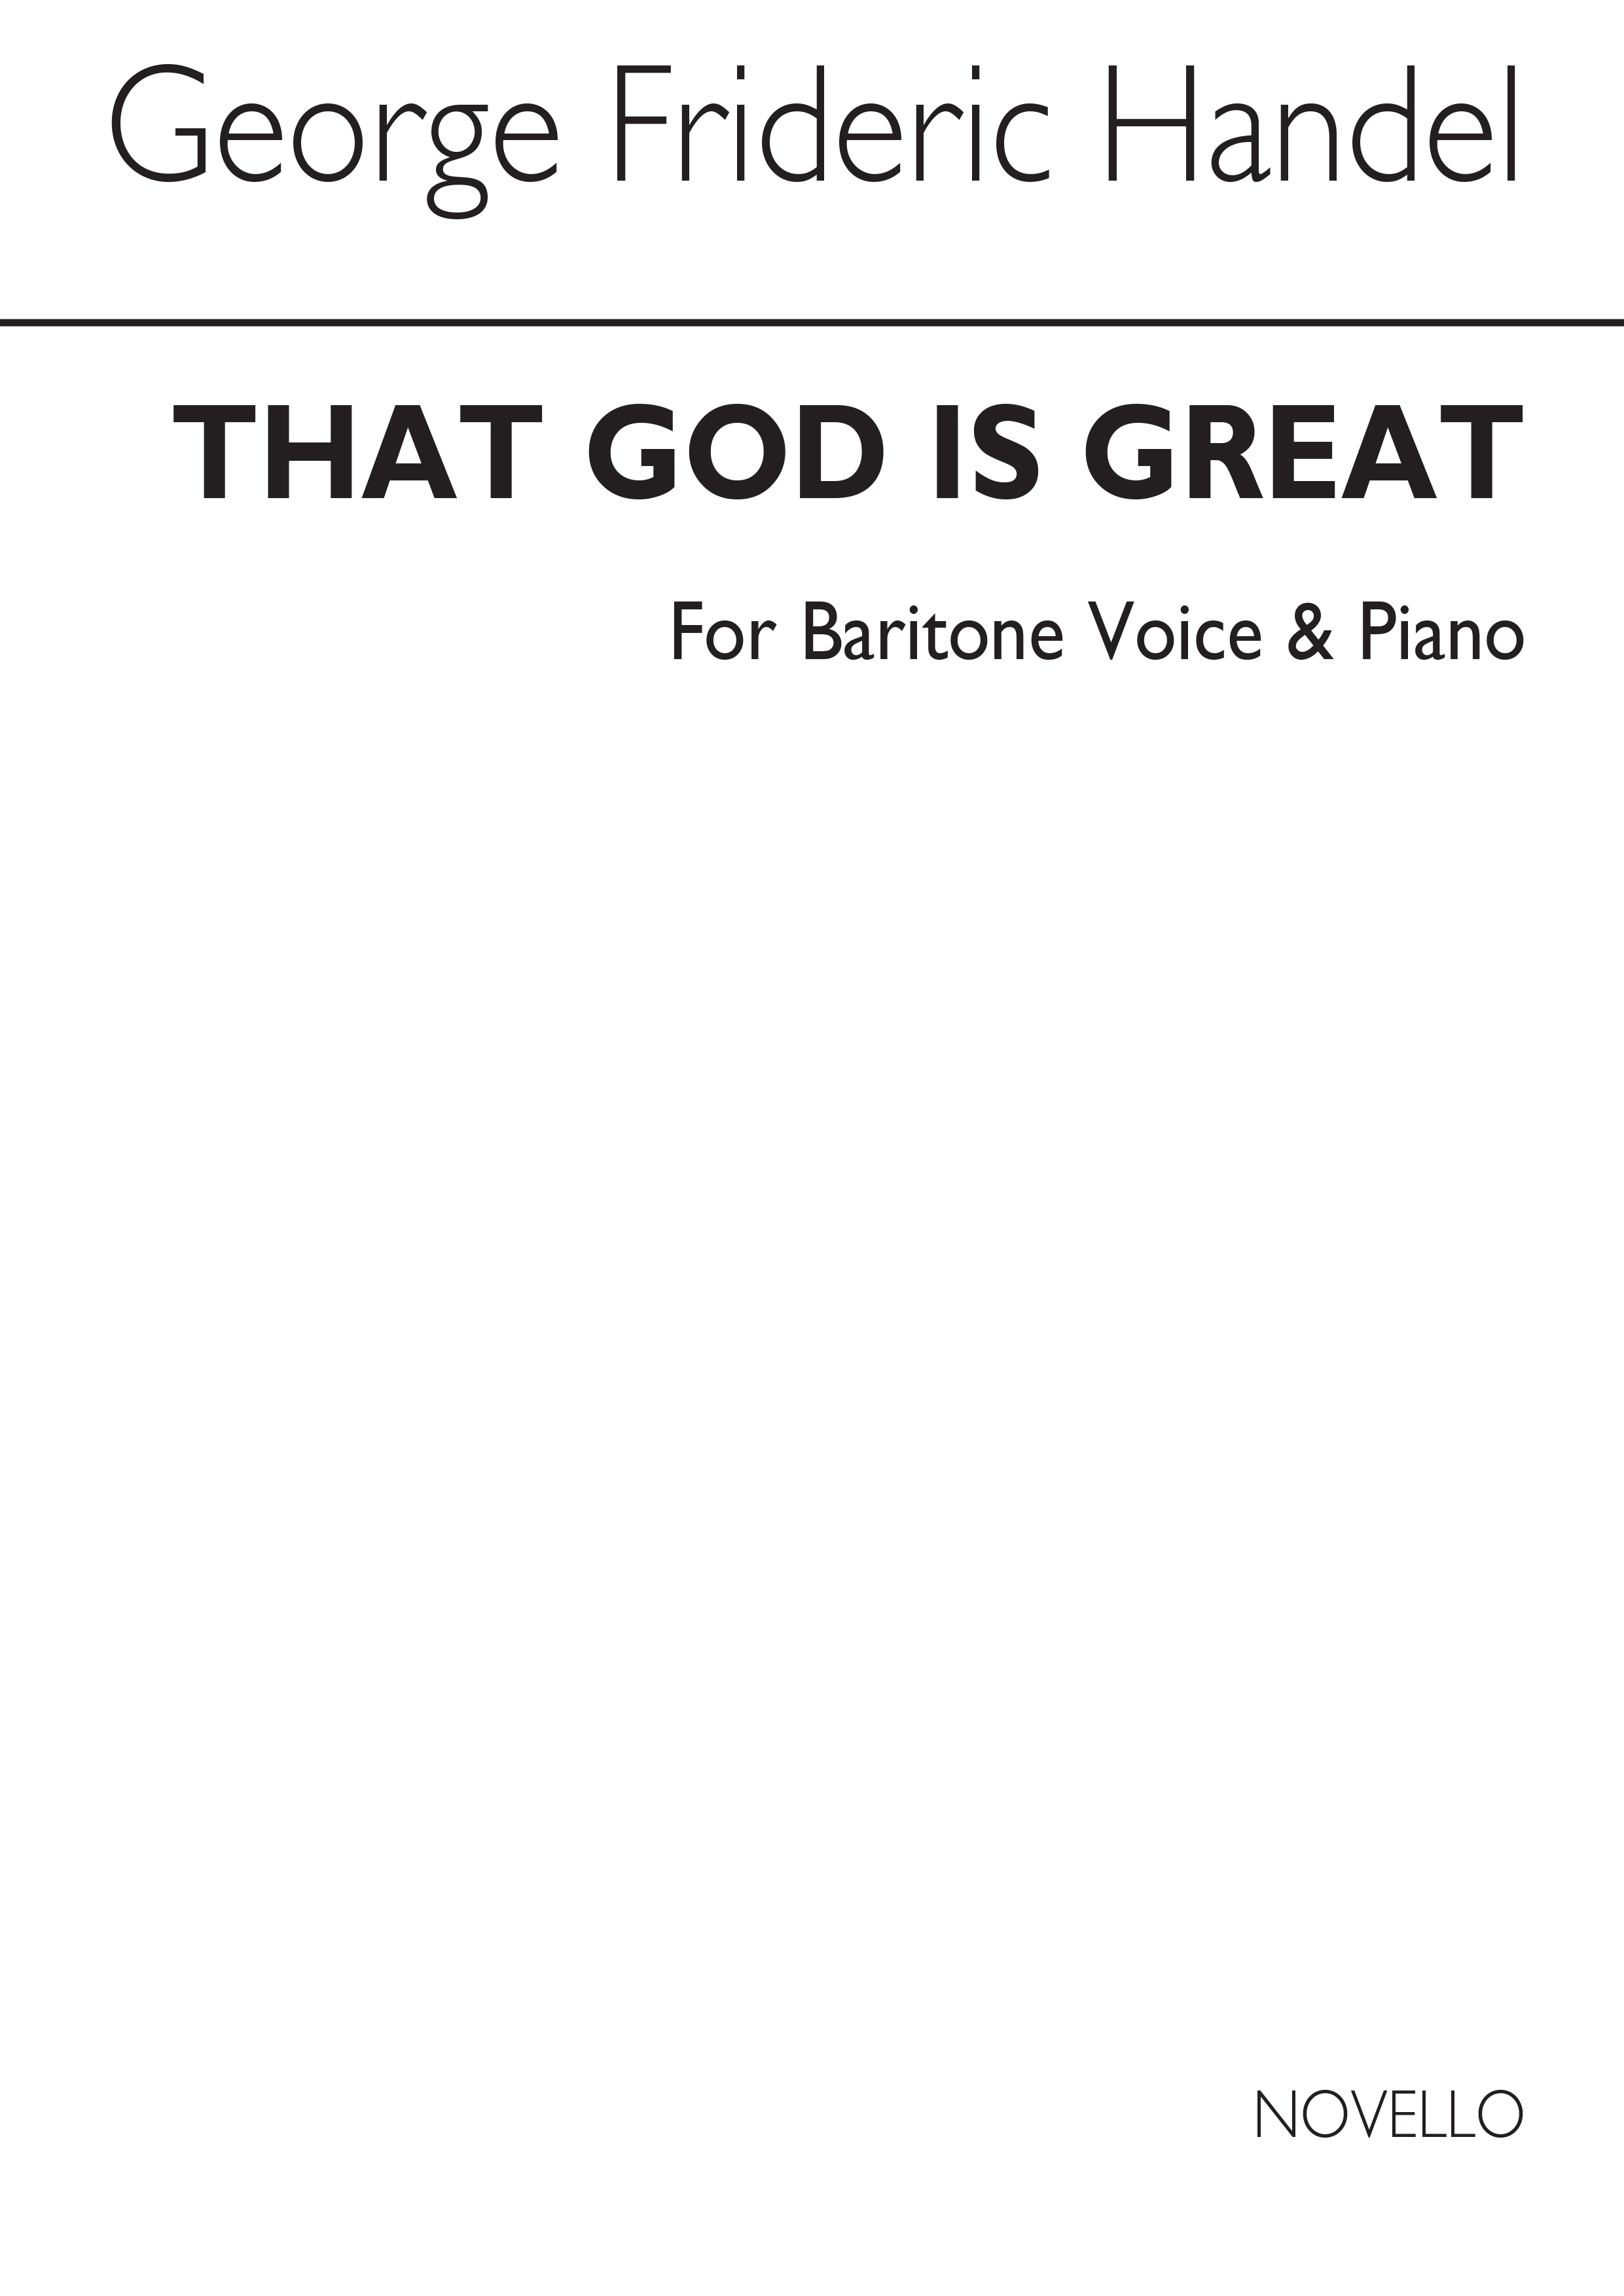 Georg Friedrich Hndel: Handel That God Is Great Baritone And Piano: Baritone